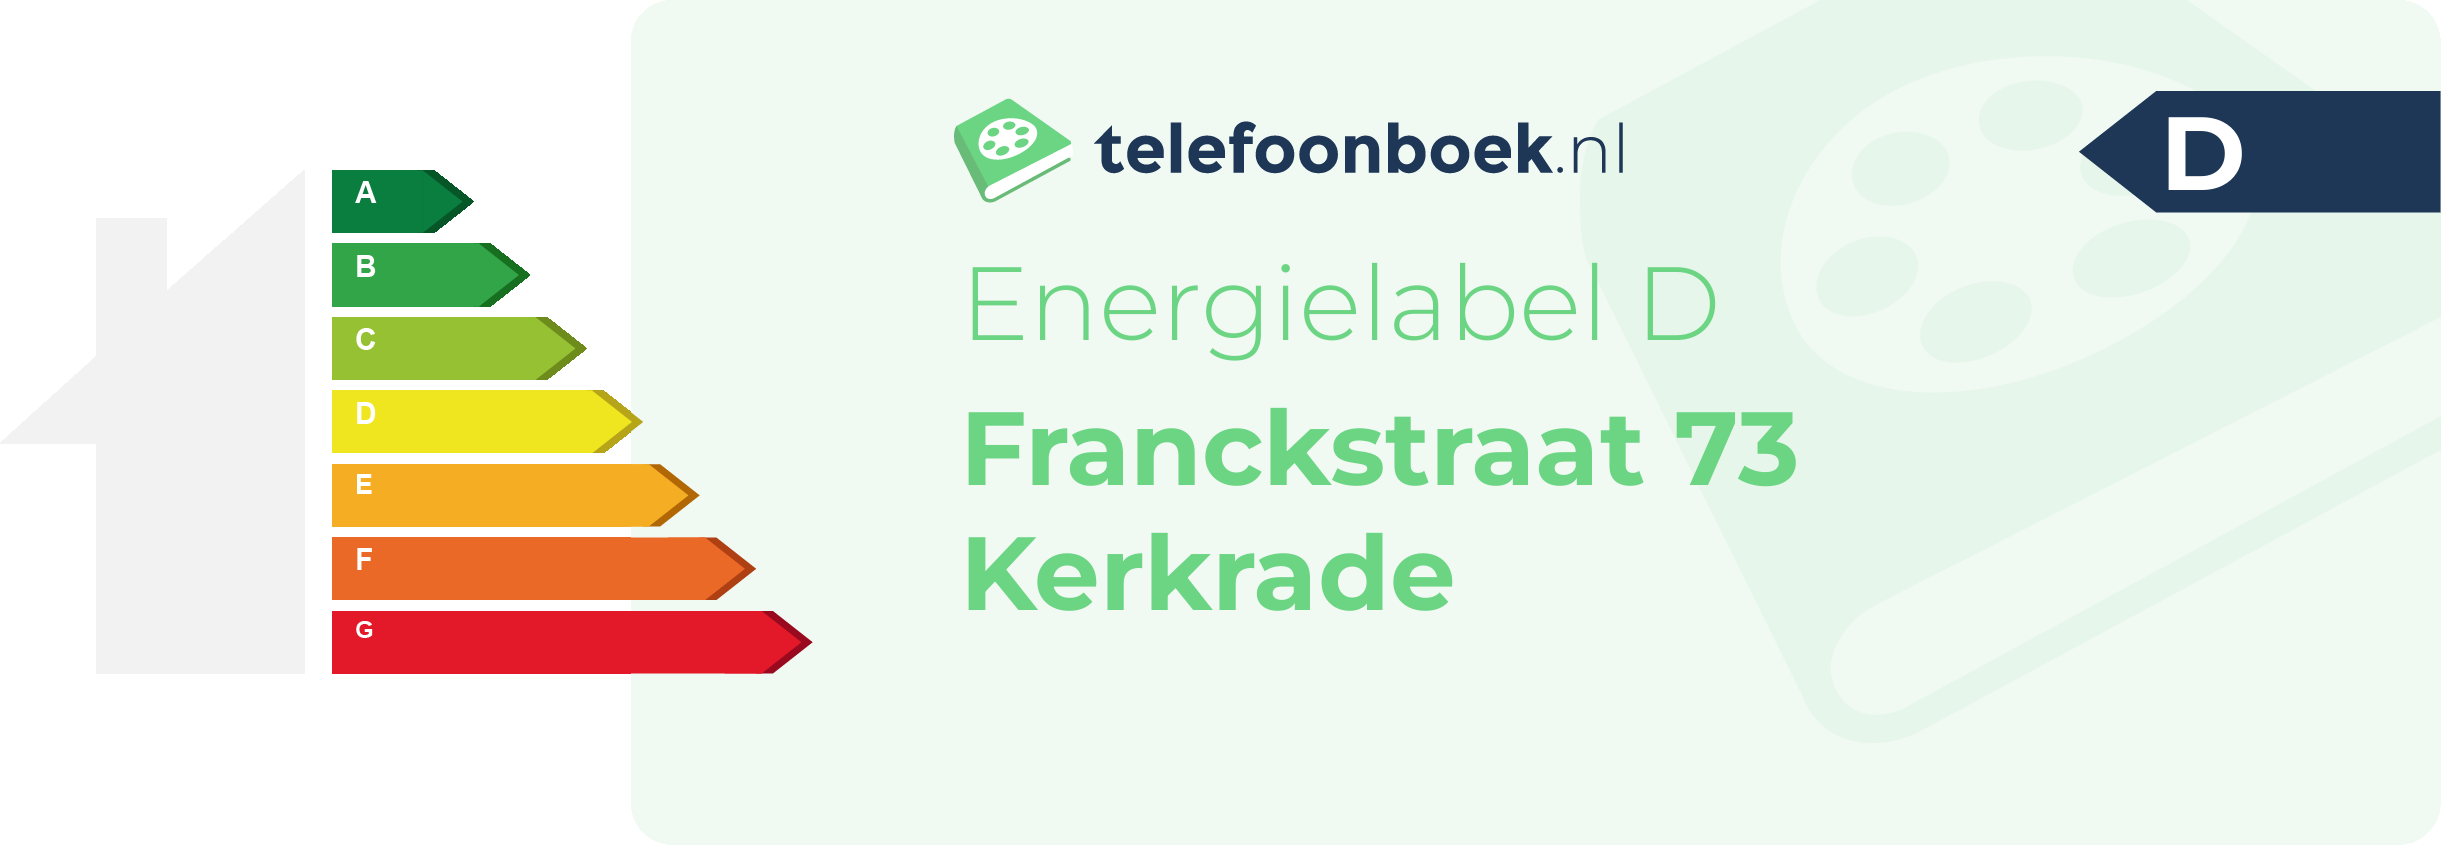 Energielabel Franckstraat 73 Kerkrade